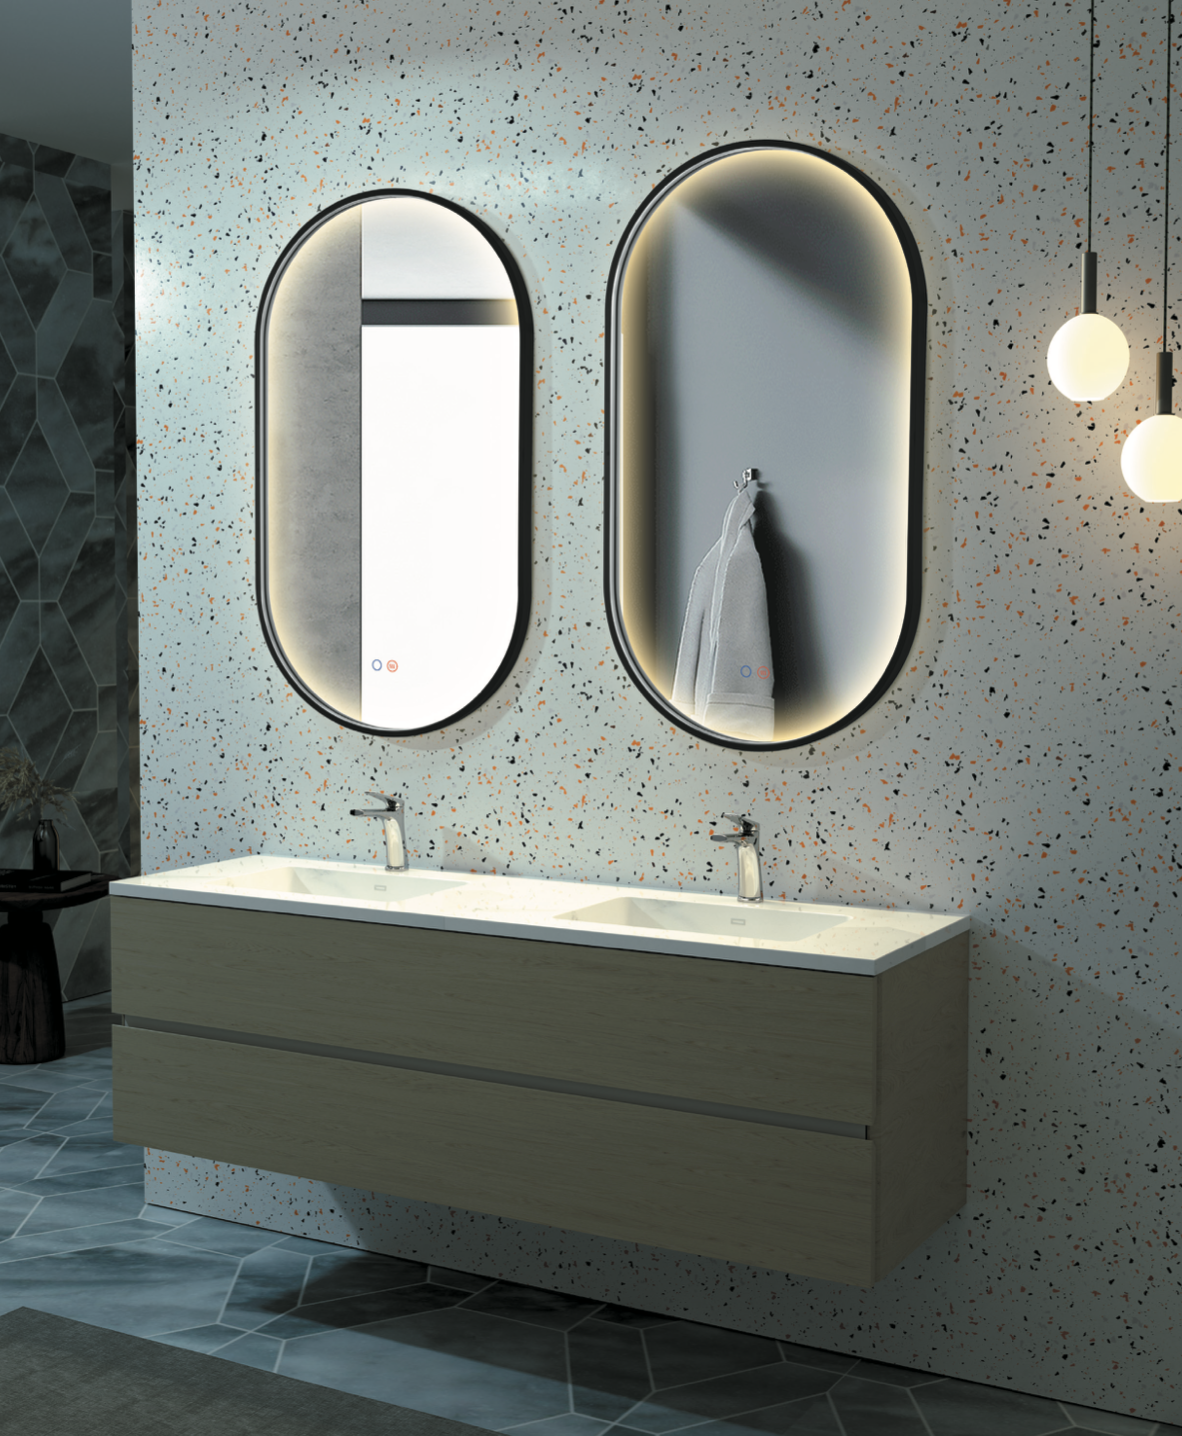 Elliptical bathroom mirror with perimeter light integrated into Rio frame by Ledimex